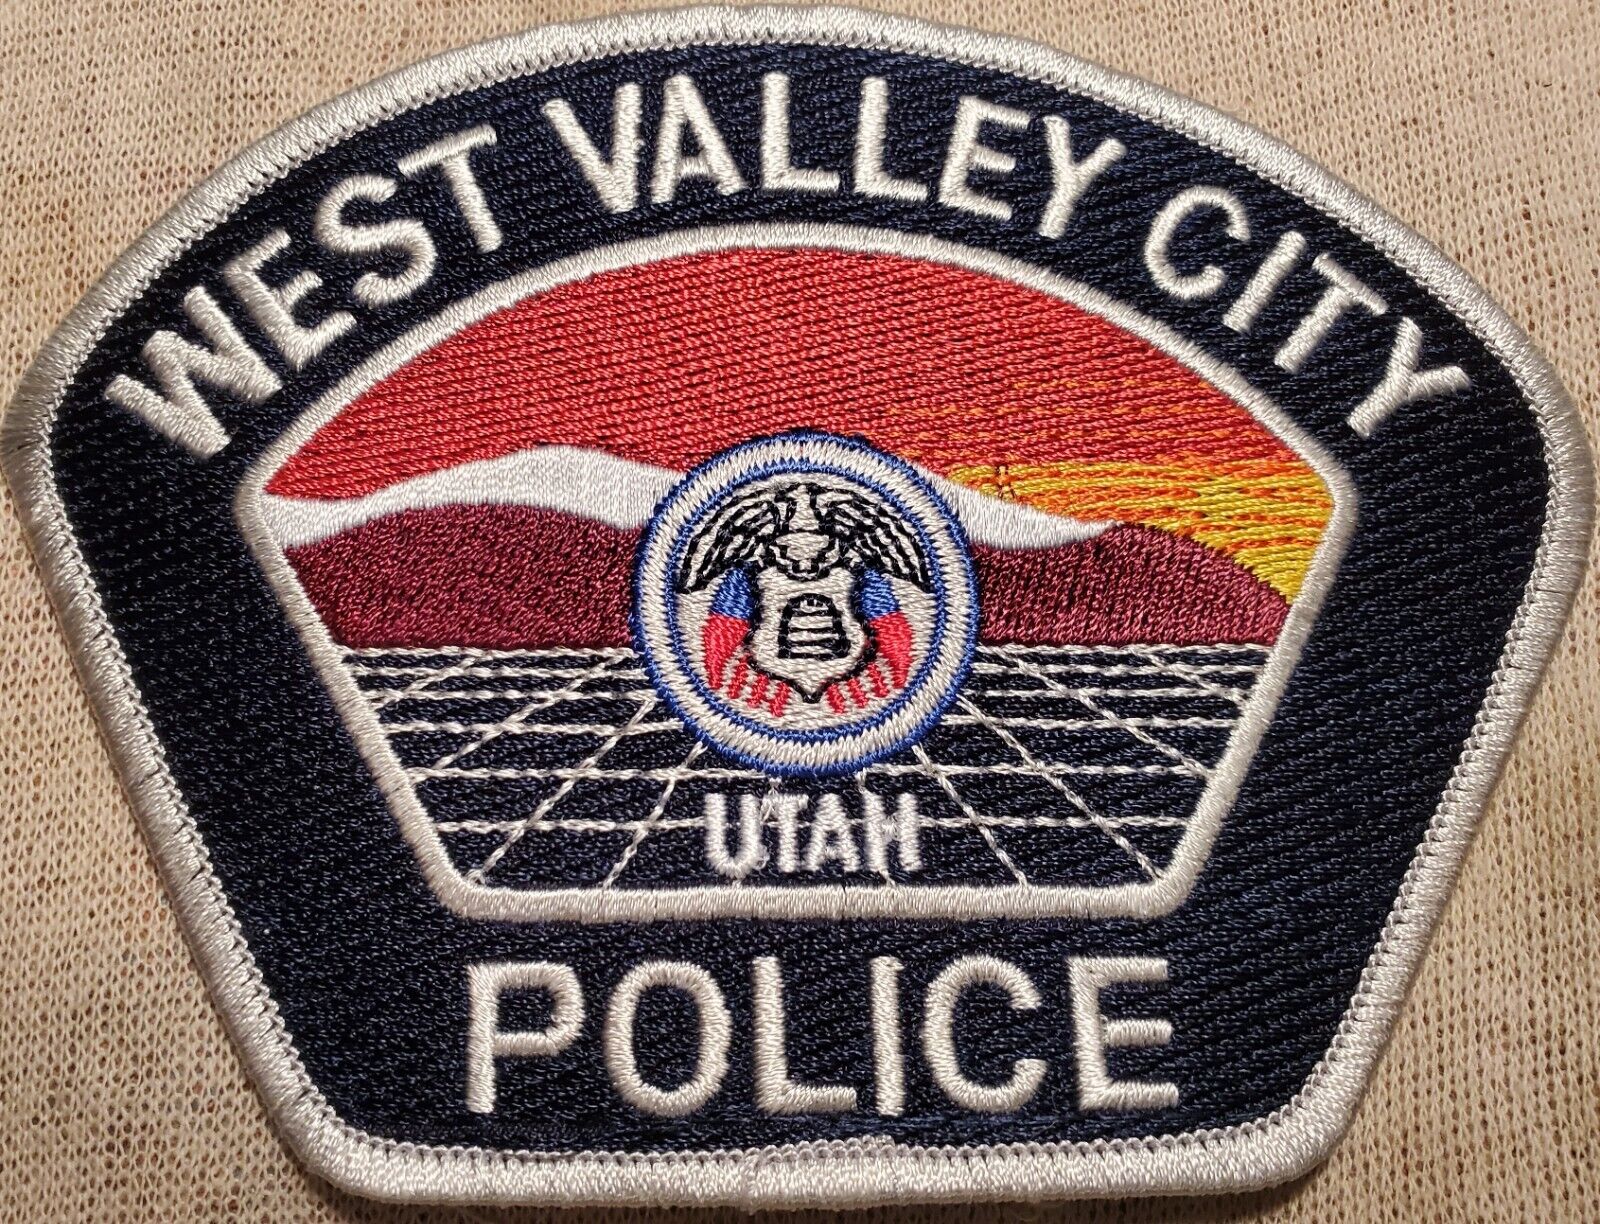 UT West Valley City Utah Police Shoulder Patch